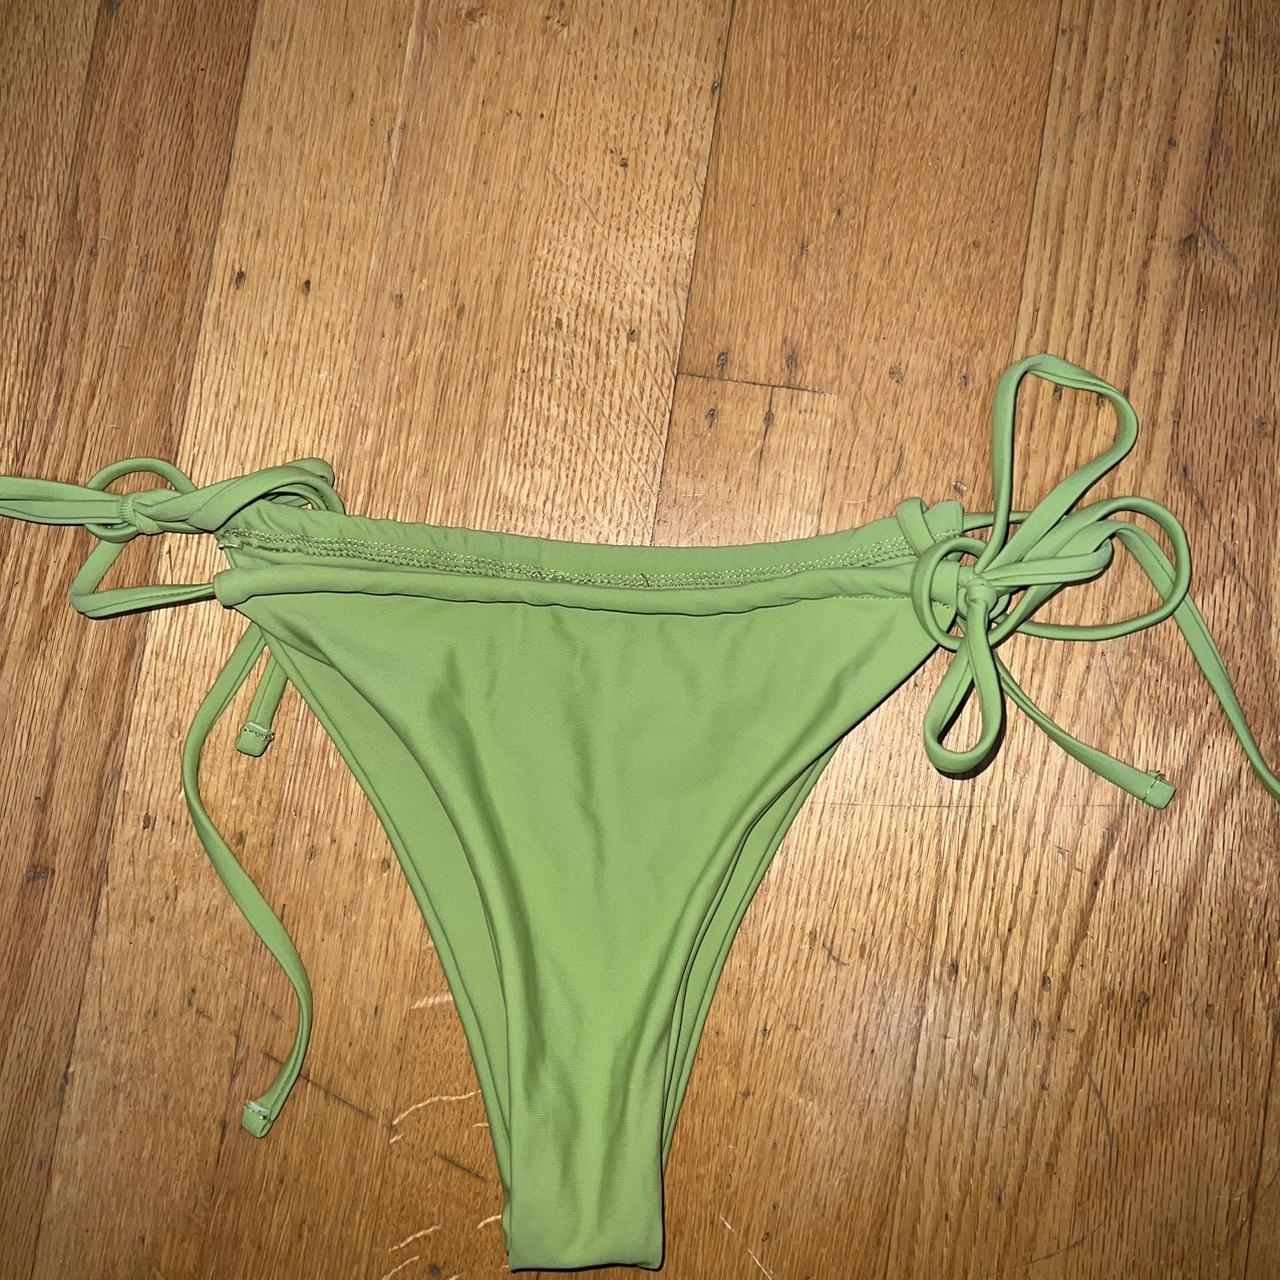 Triangl Womens Green Bikinis And Tankini Sets Depop